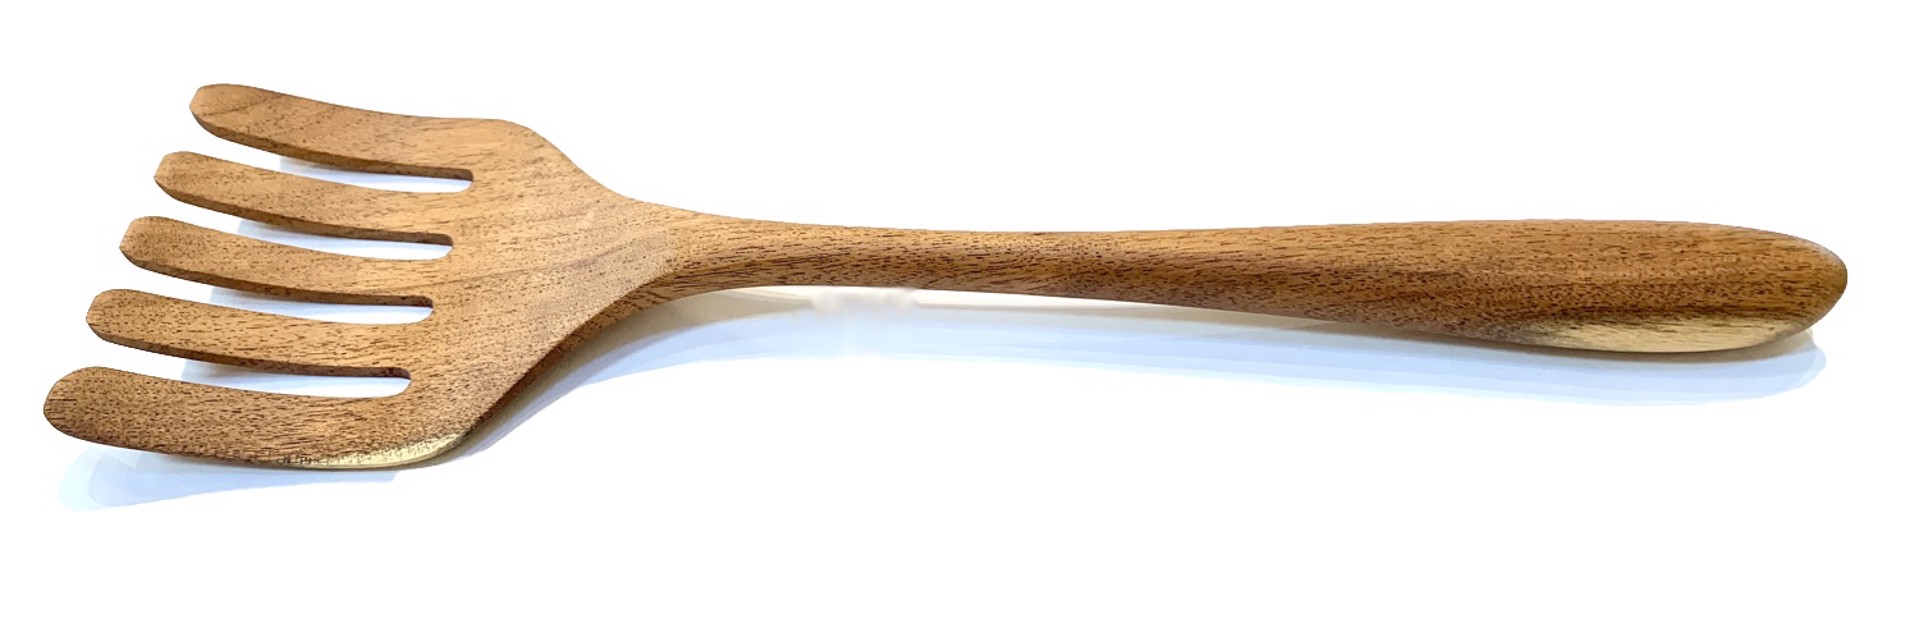 Utensils - Mesquite Pasta Fork by TreeStump Woodcraft